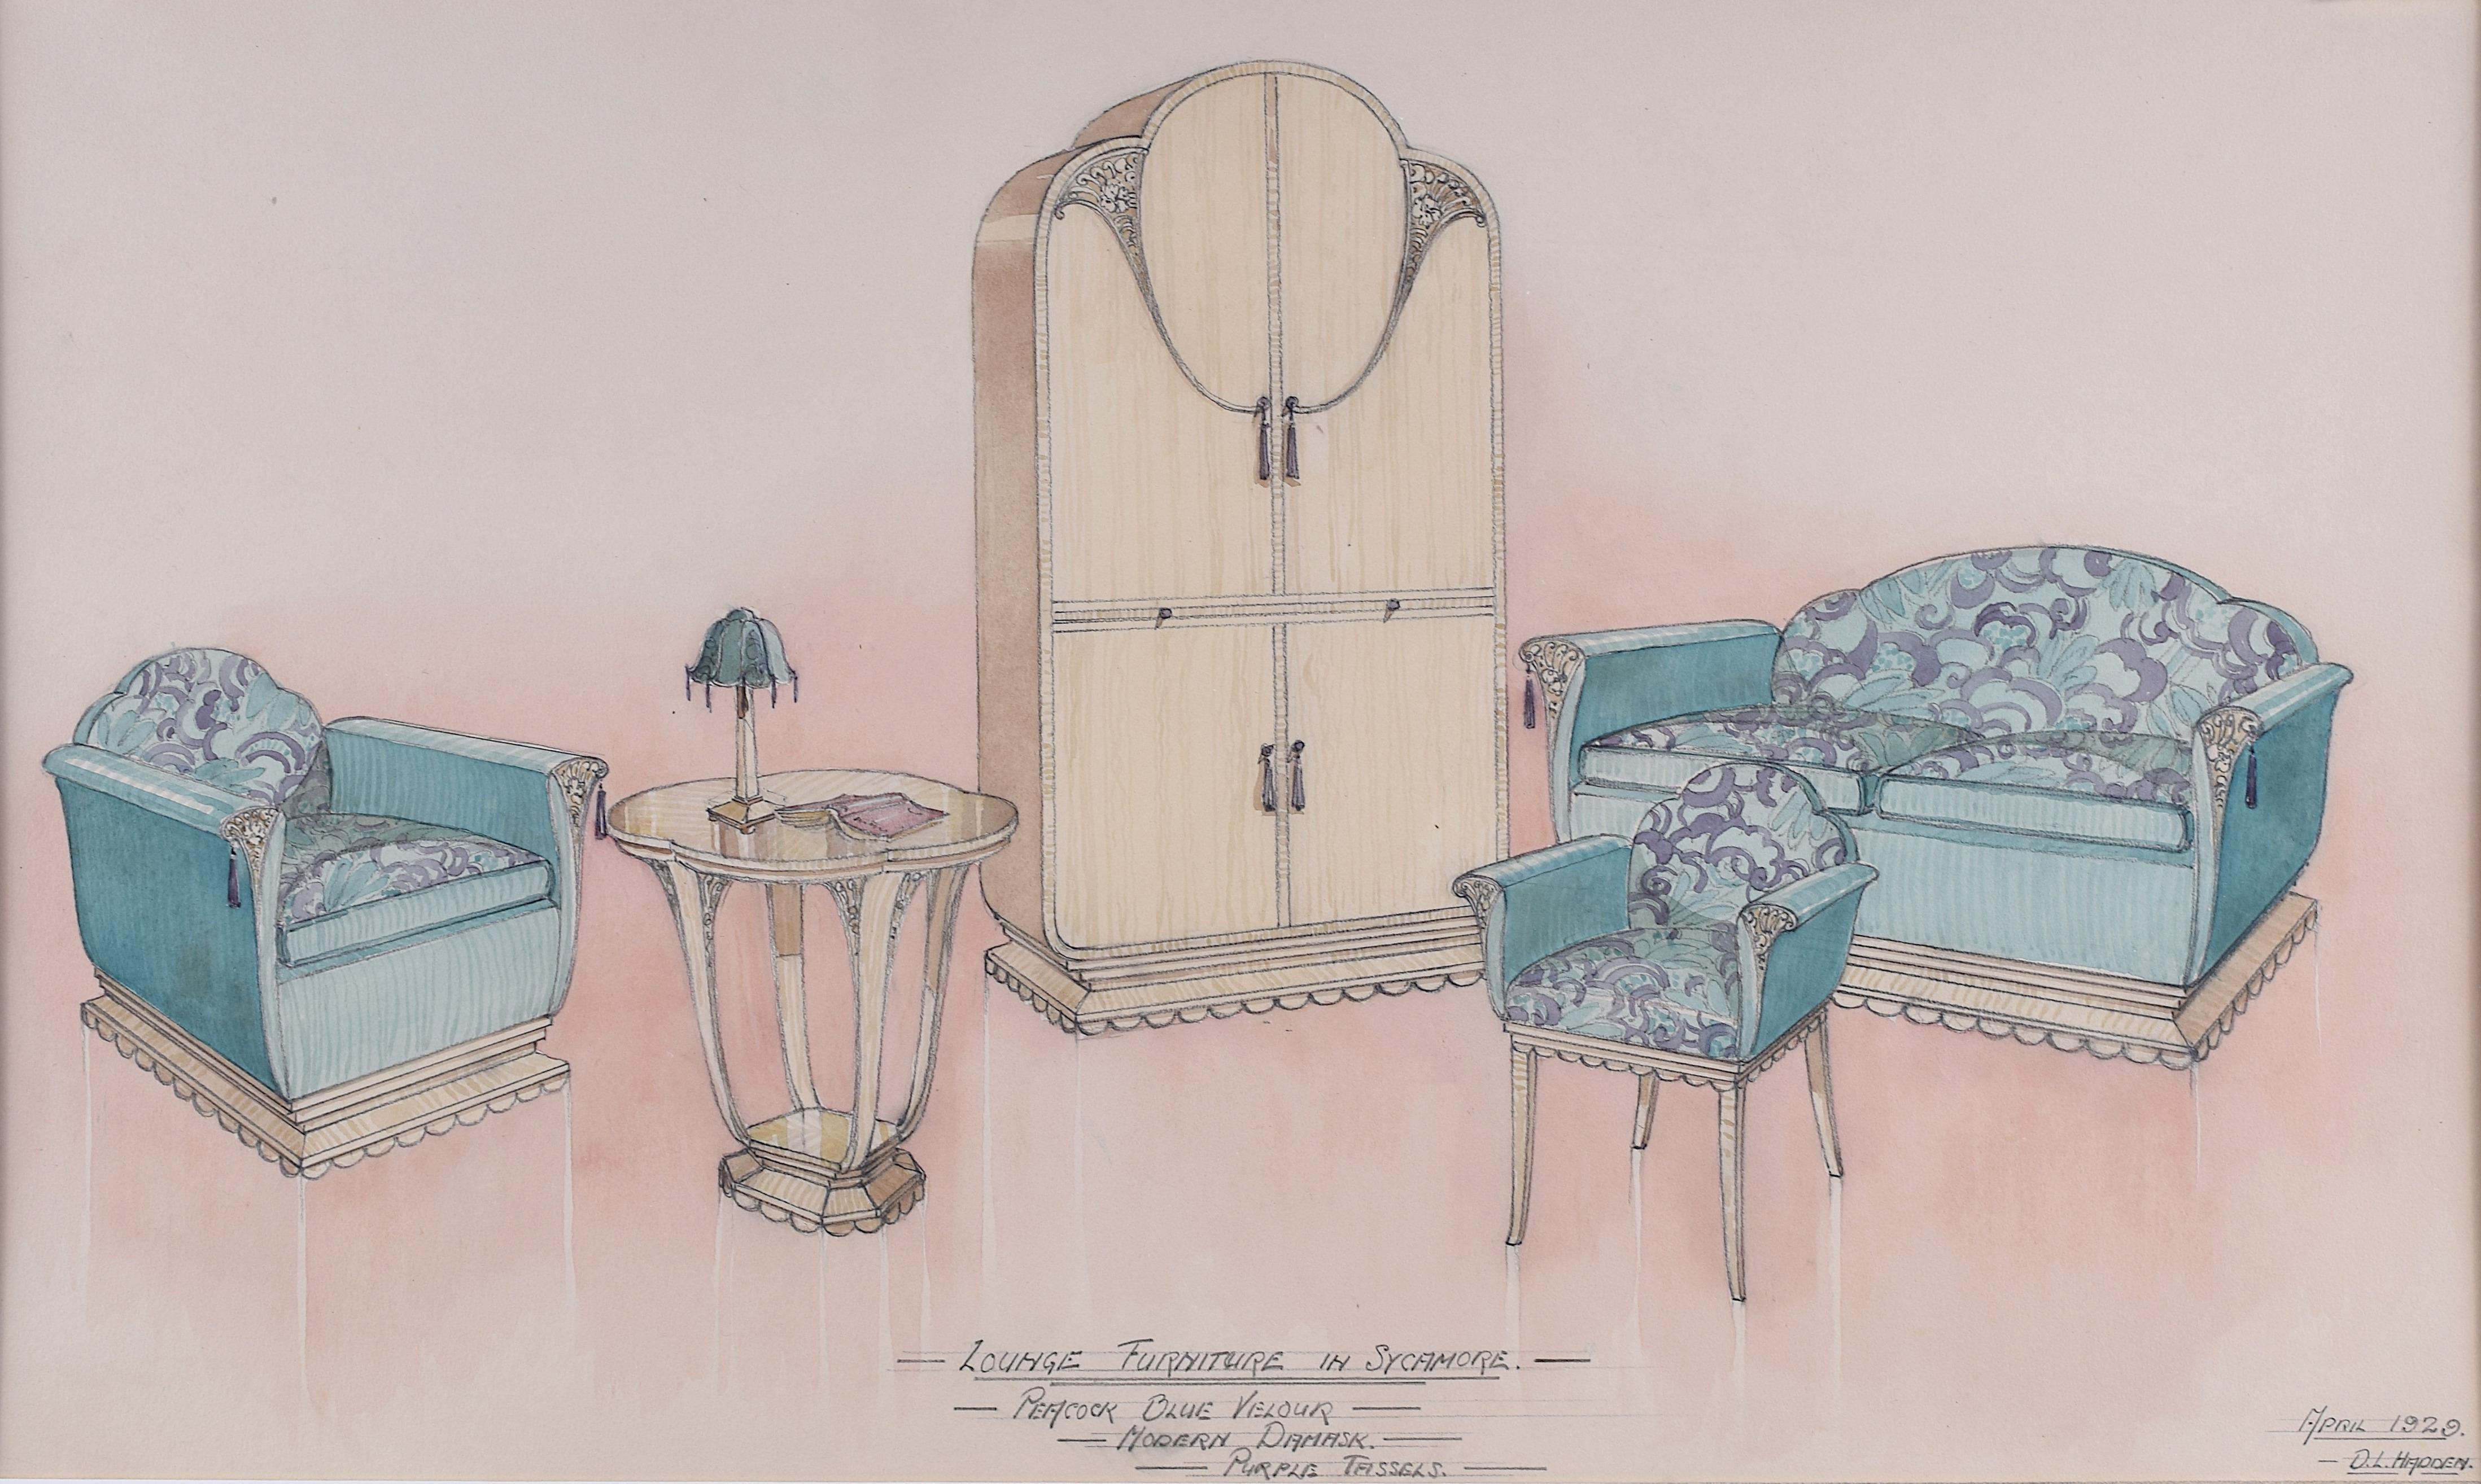 Donald L. Hadden Interior Art - Design for Lounge Furniture. 1929 for George M Hammer designers, London UK